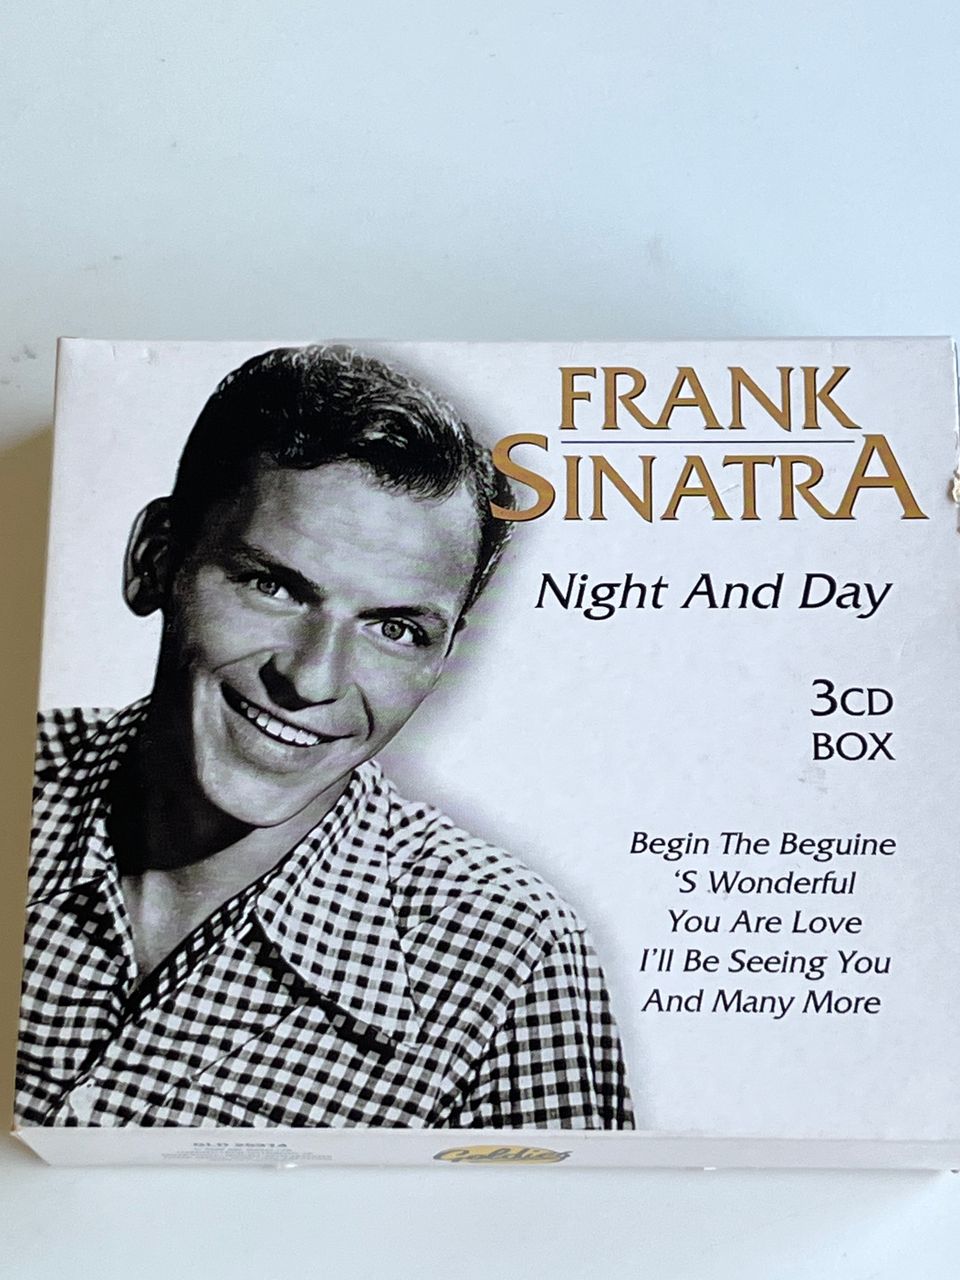 Frank Sinatra Night and Day 3 CD Box.